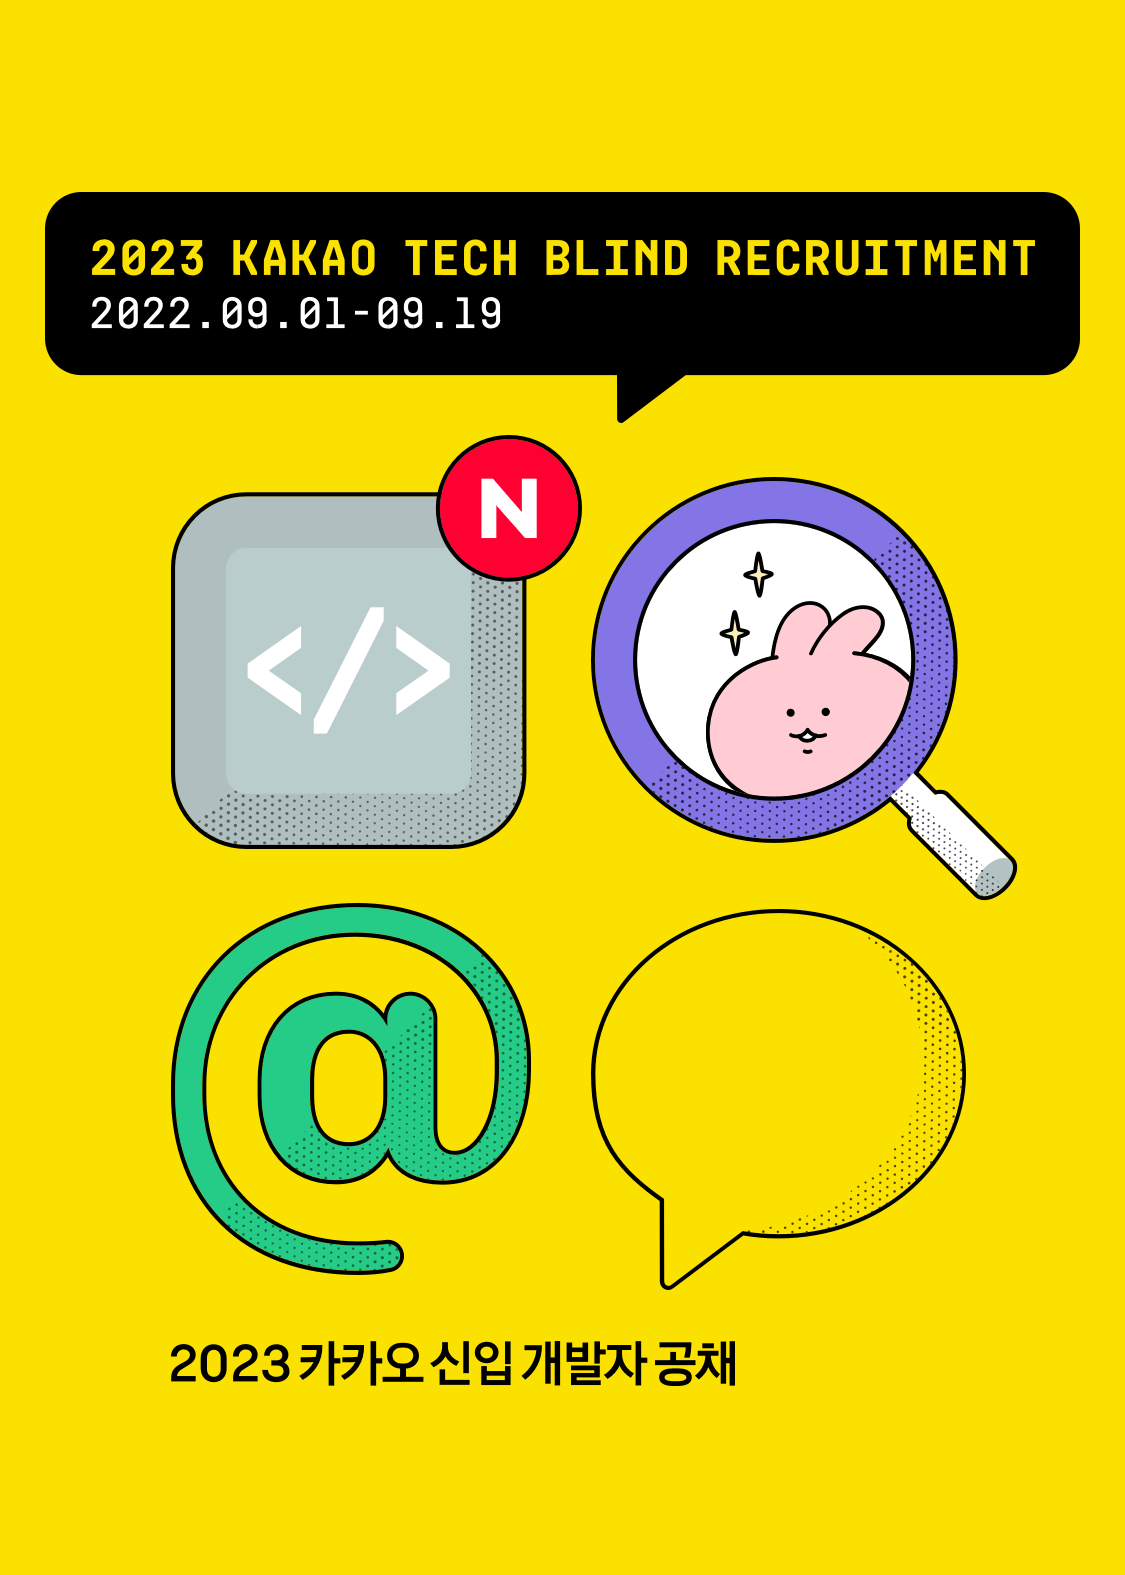 2023 kakao Tech Blind Recruitment 2022.09.01 - 09.19 / 2023 카카오 신입 개발자 공채